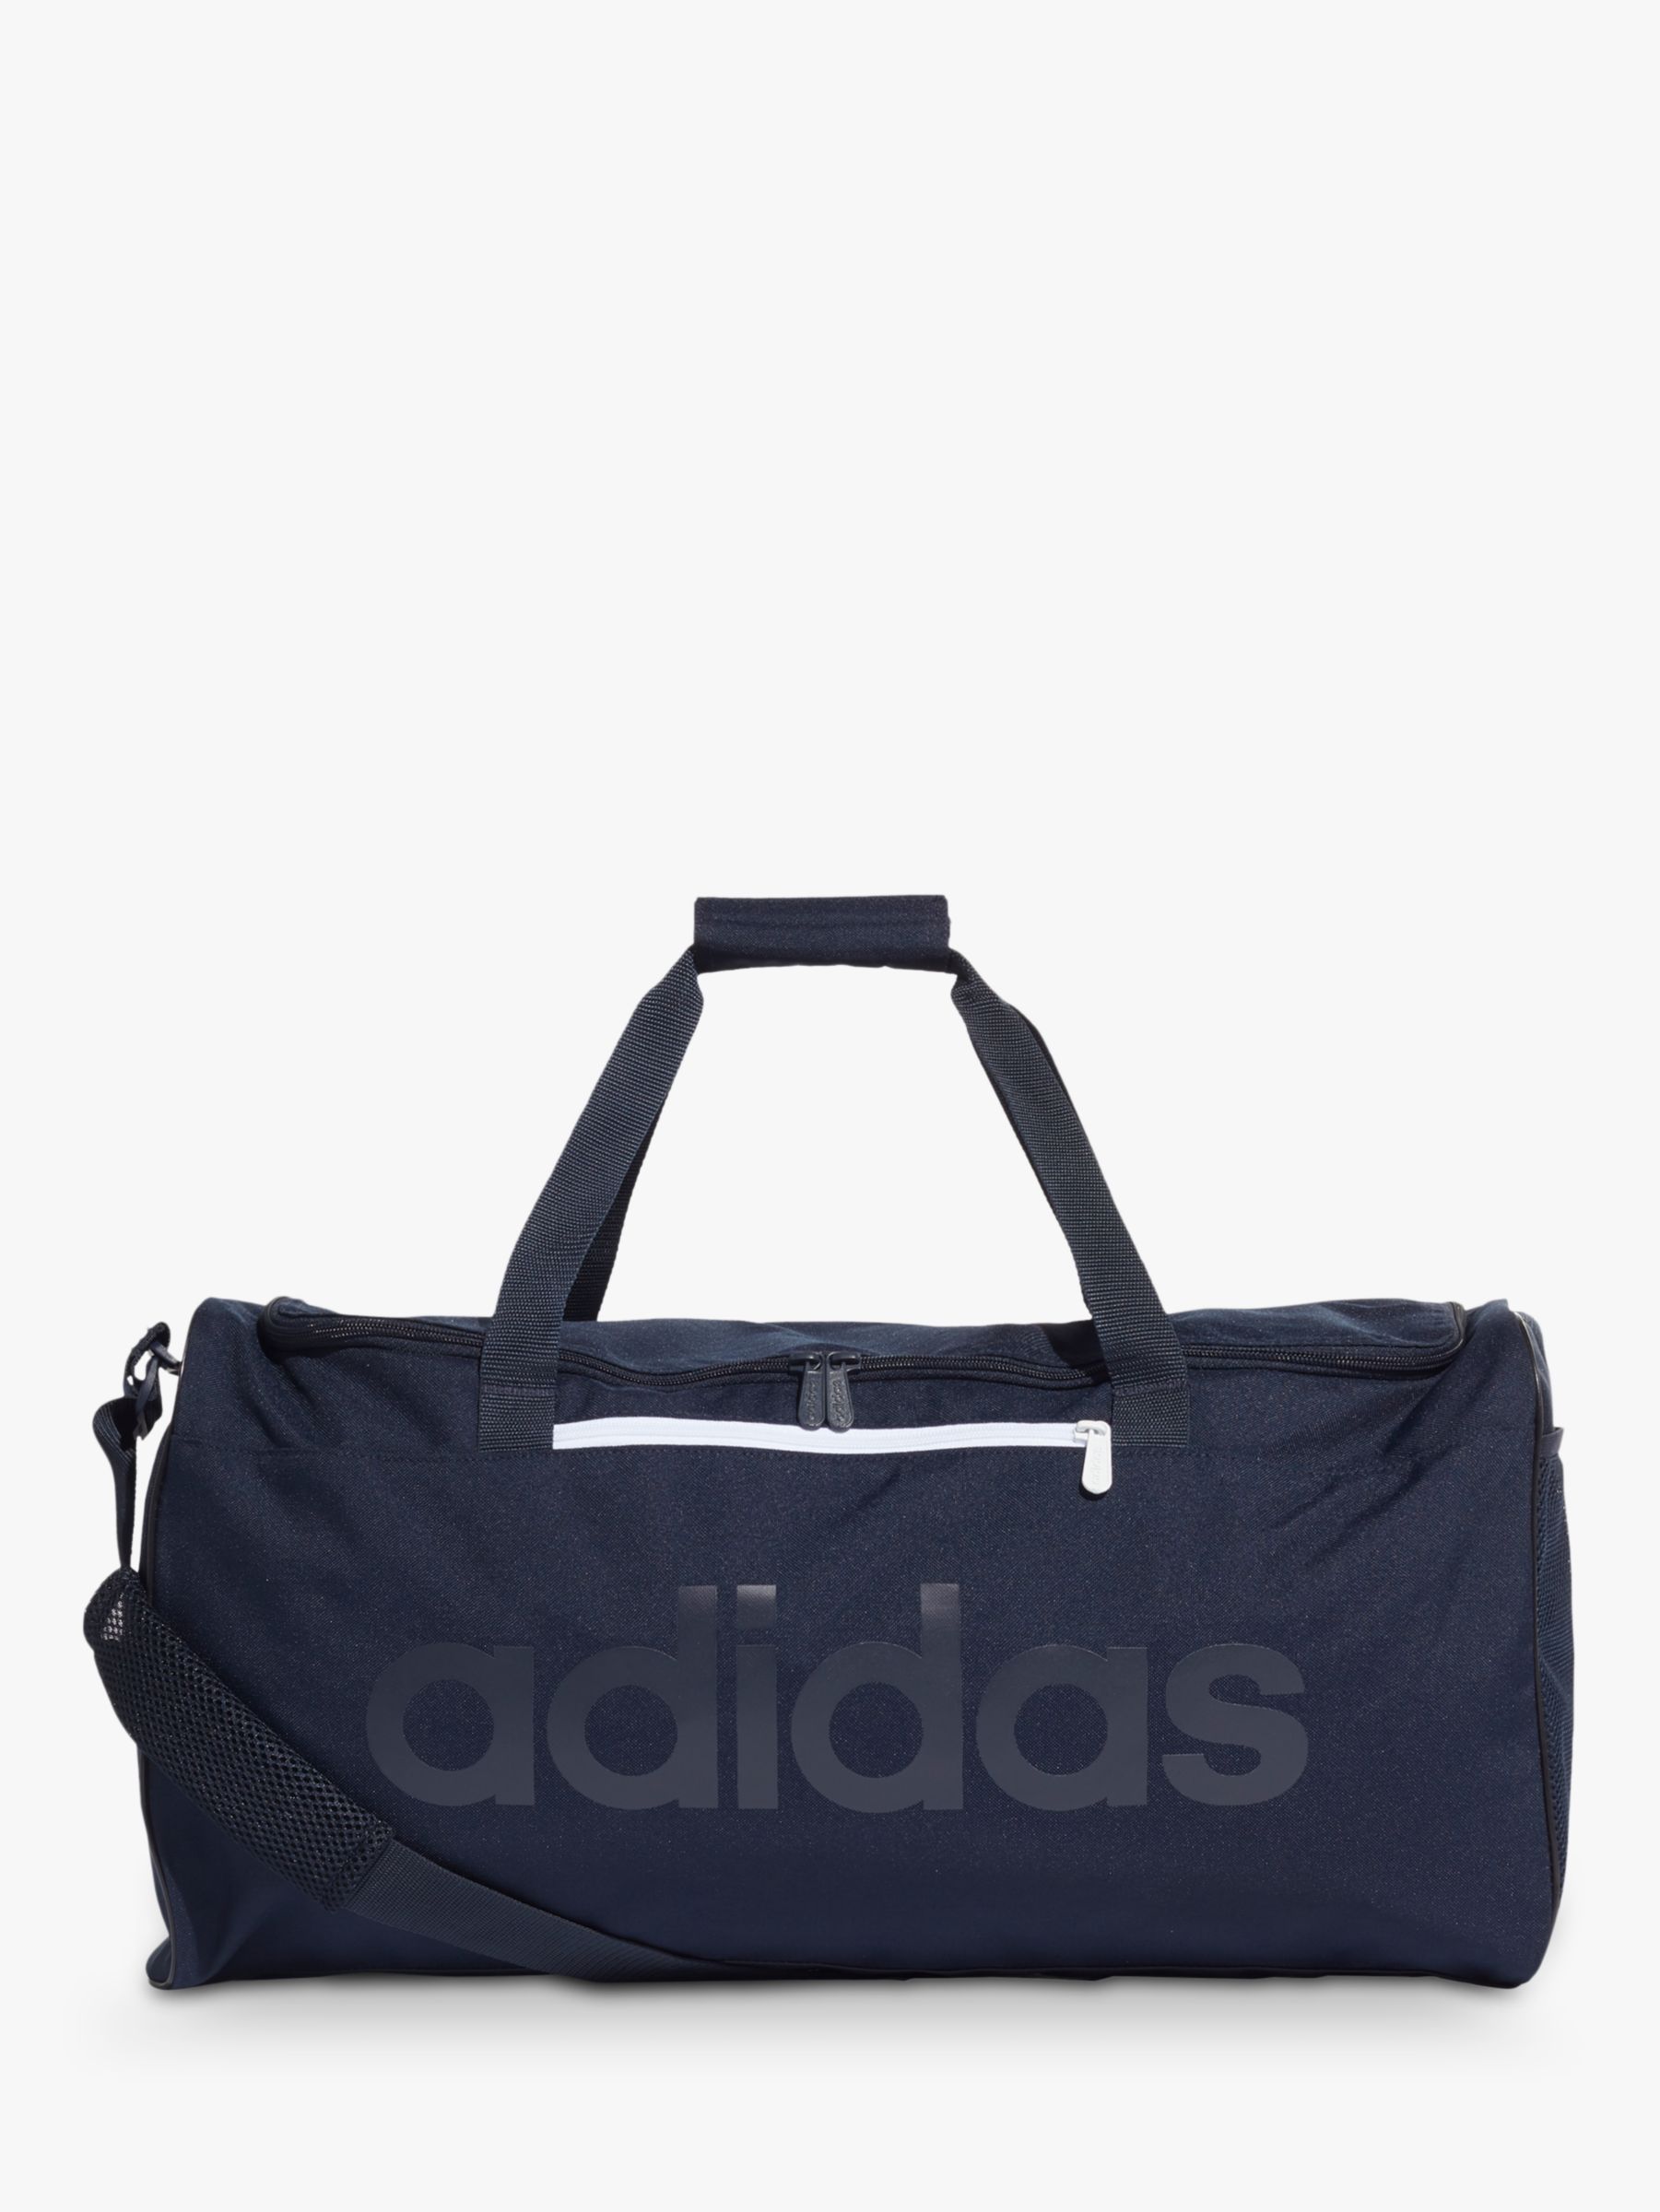 adidas linear team bag medium